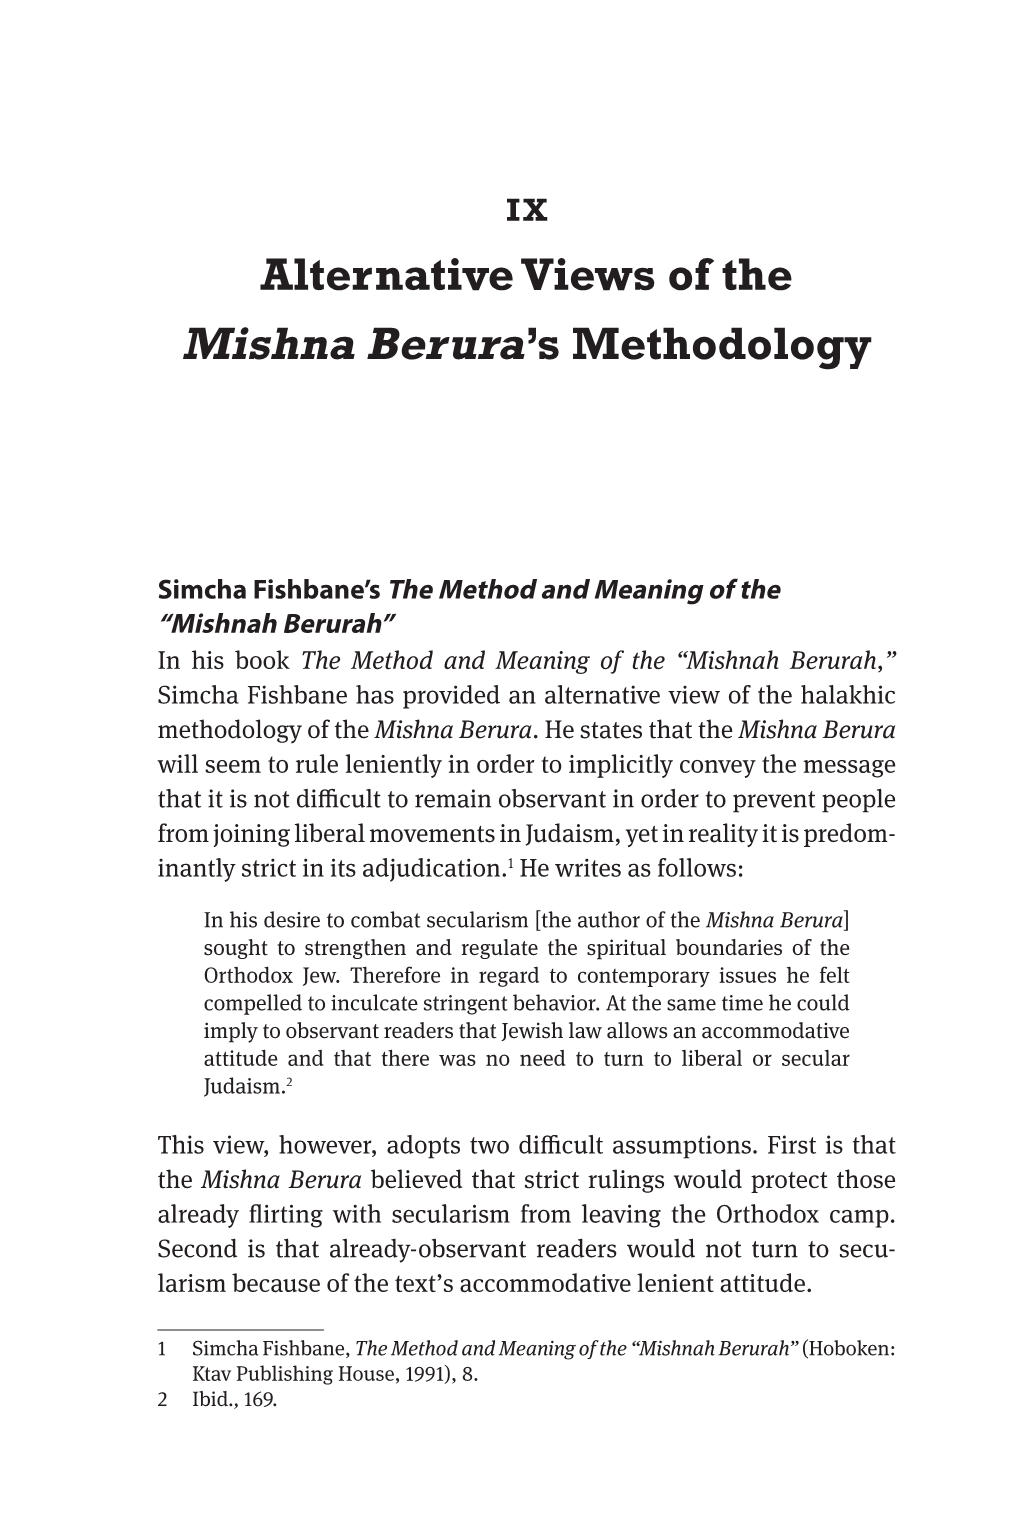 Alternative Views of the Mishna Berura's Methodology